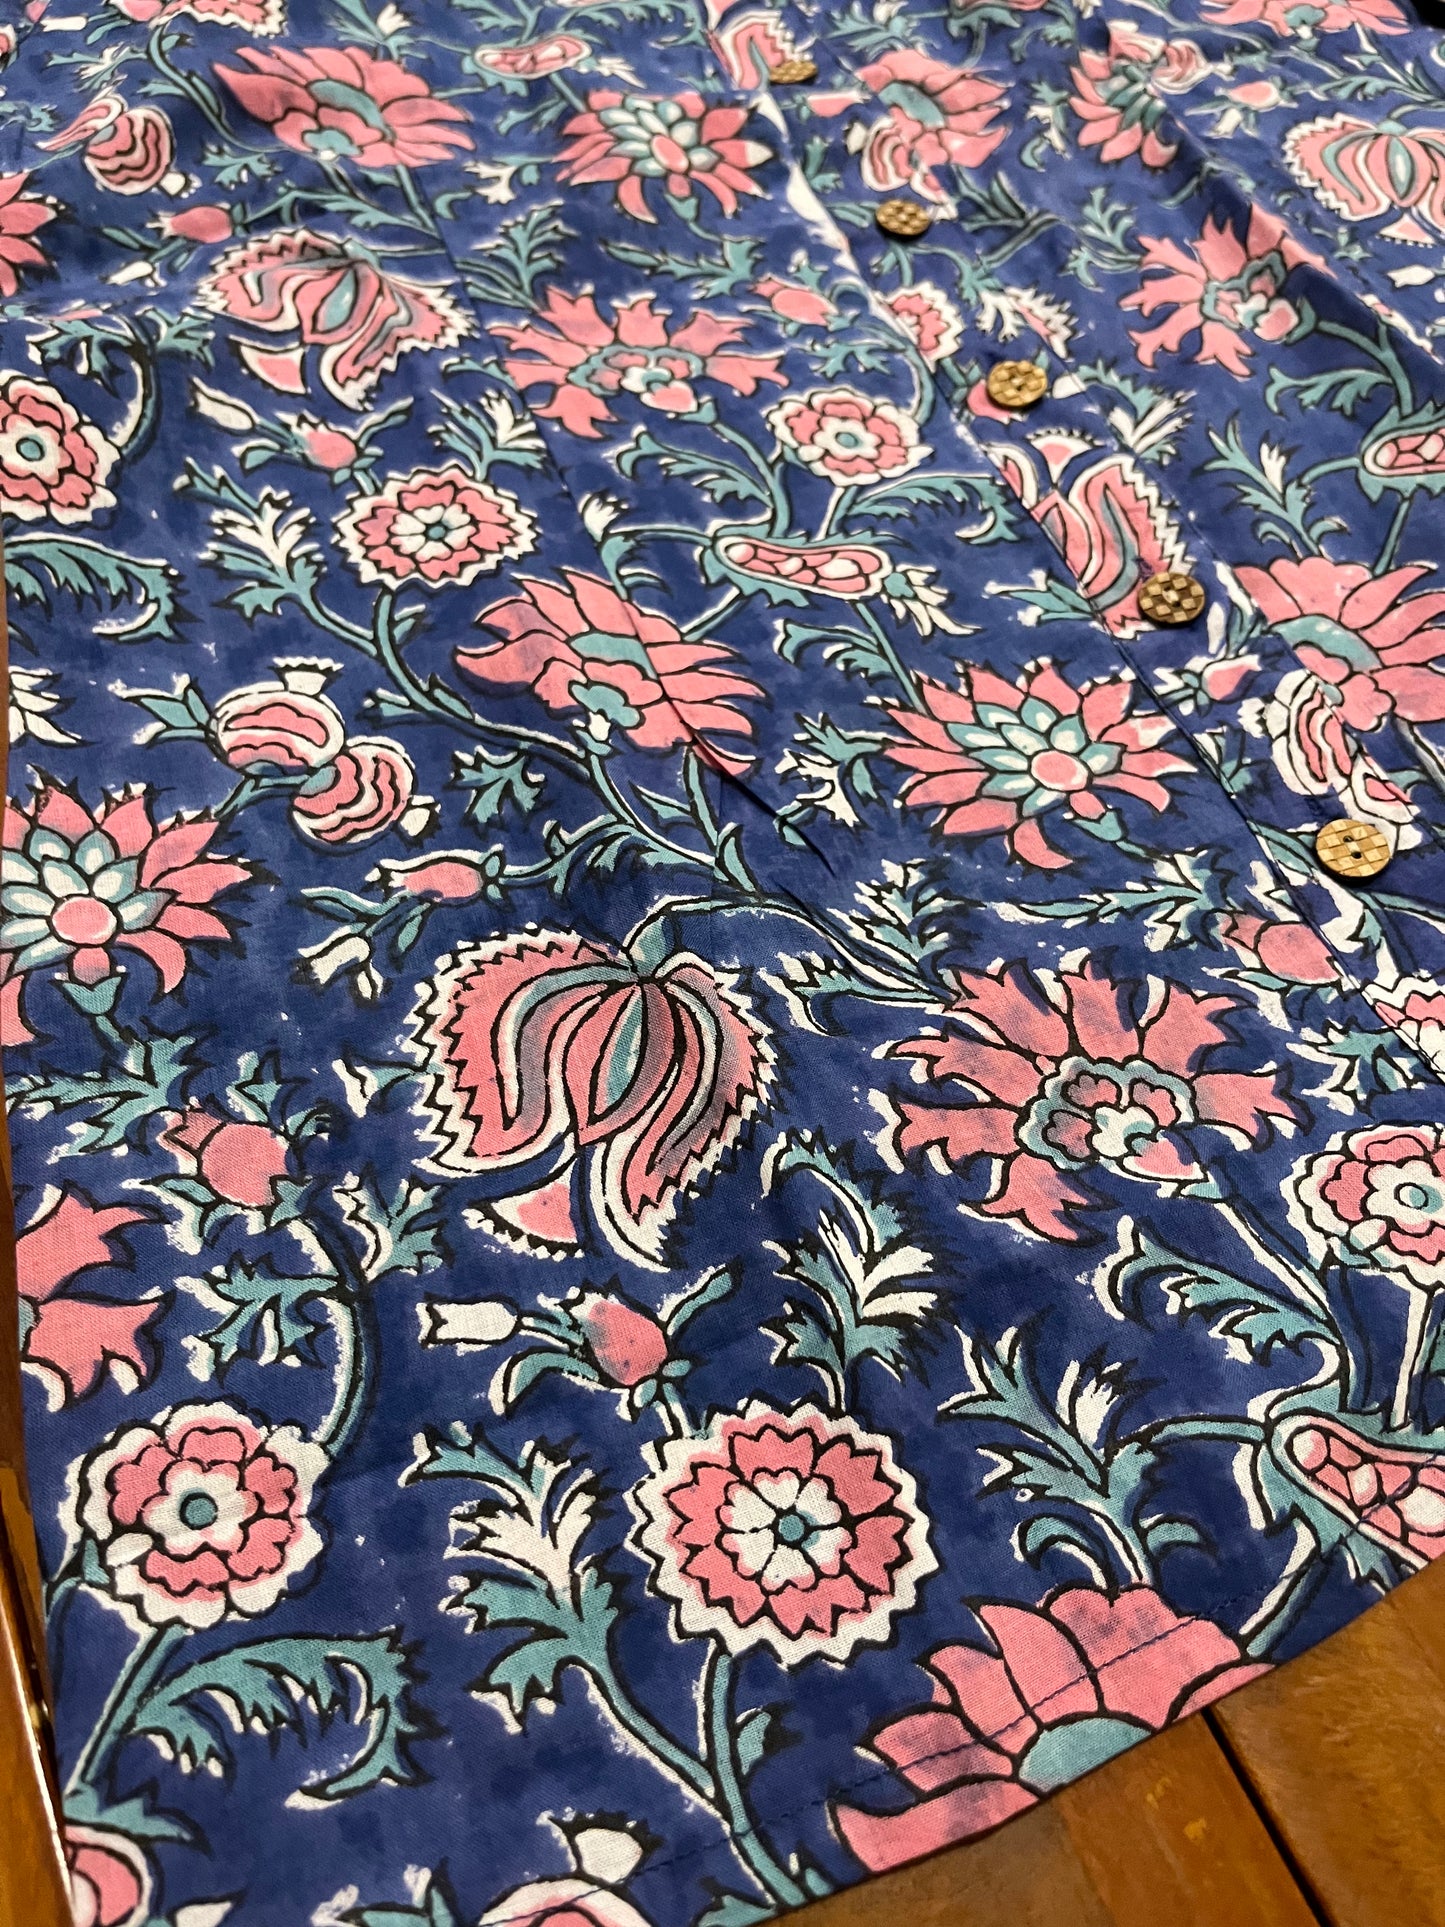 Southloom Jaipur Cotton Pink Floral Hand Block Printed Blue Top (Full Sleeves)